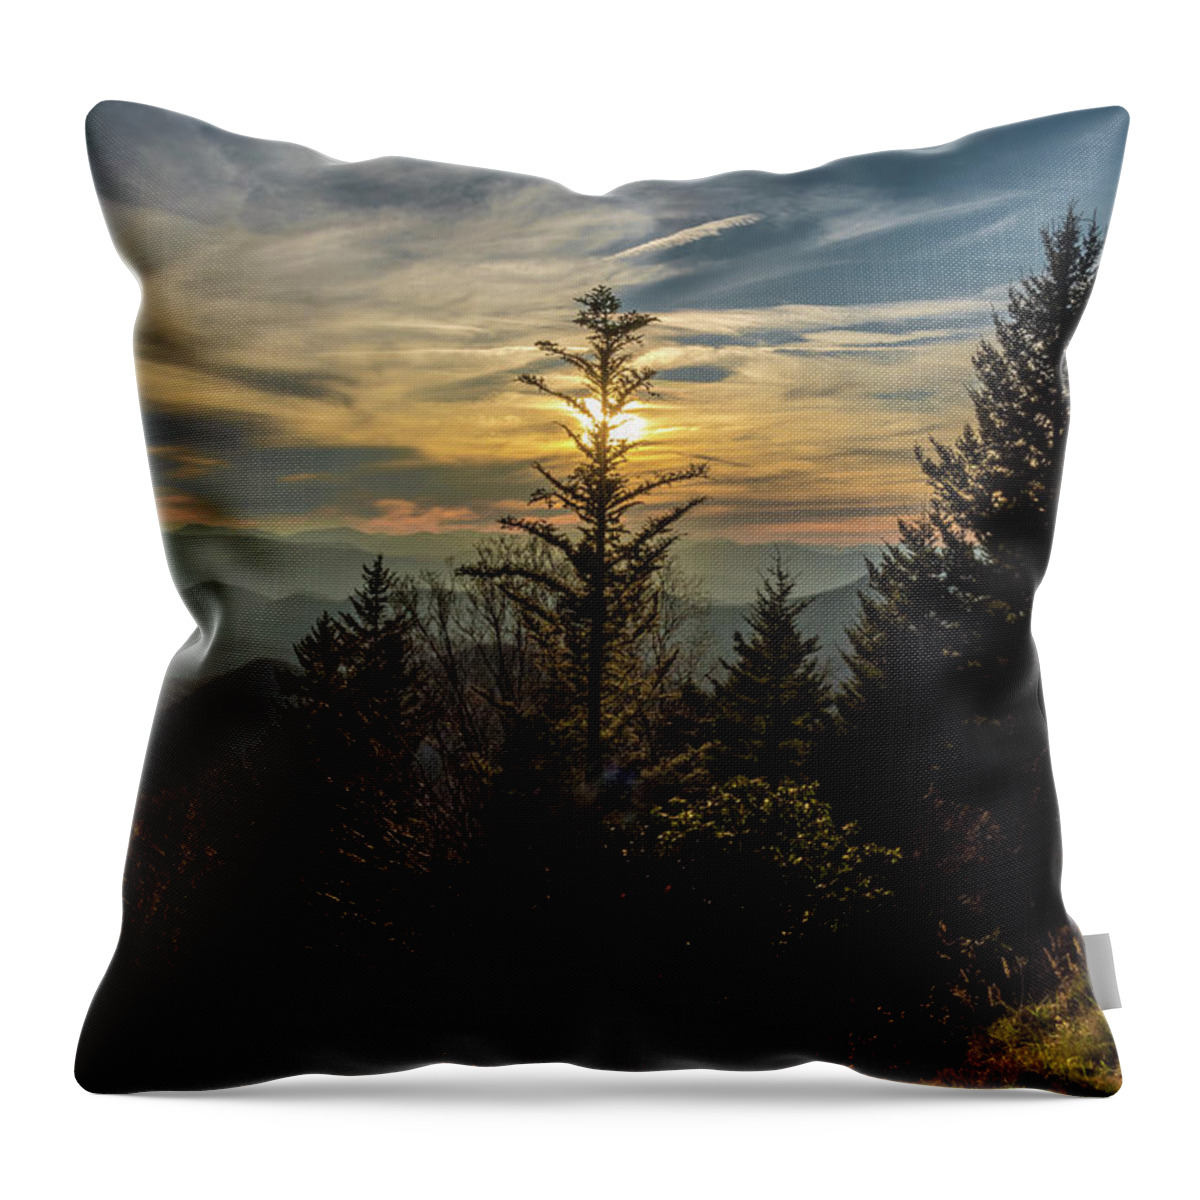 Blue Ridge Mountains Throw Pillow featuring the photograph Blue Ridge Mountains Sunset by Jaime Mercado